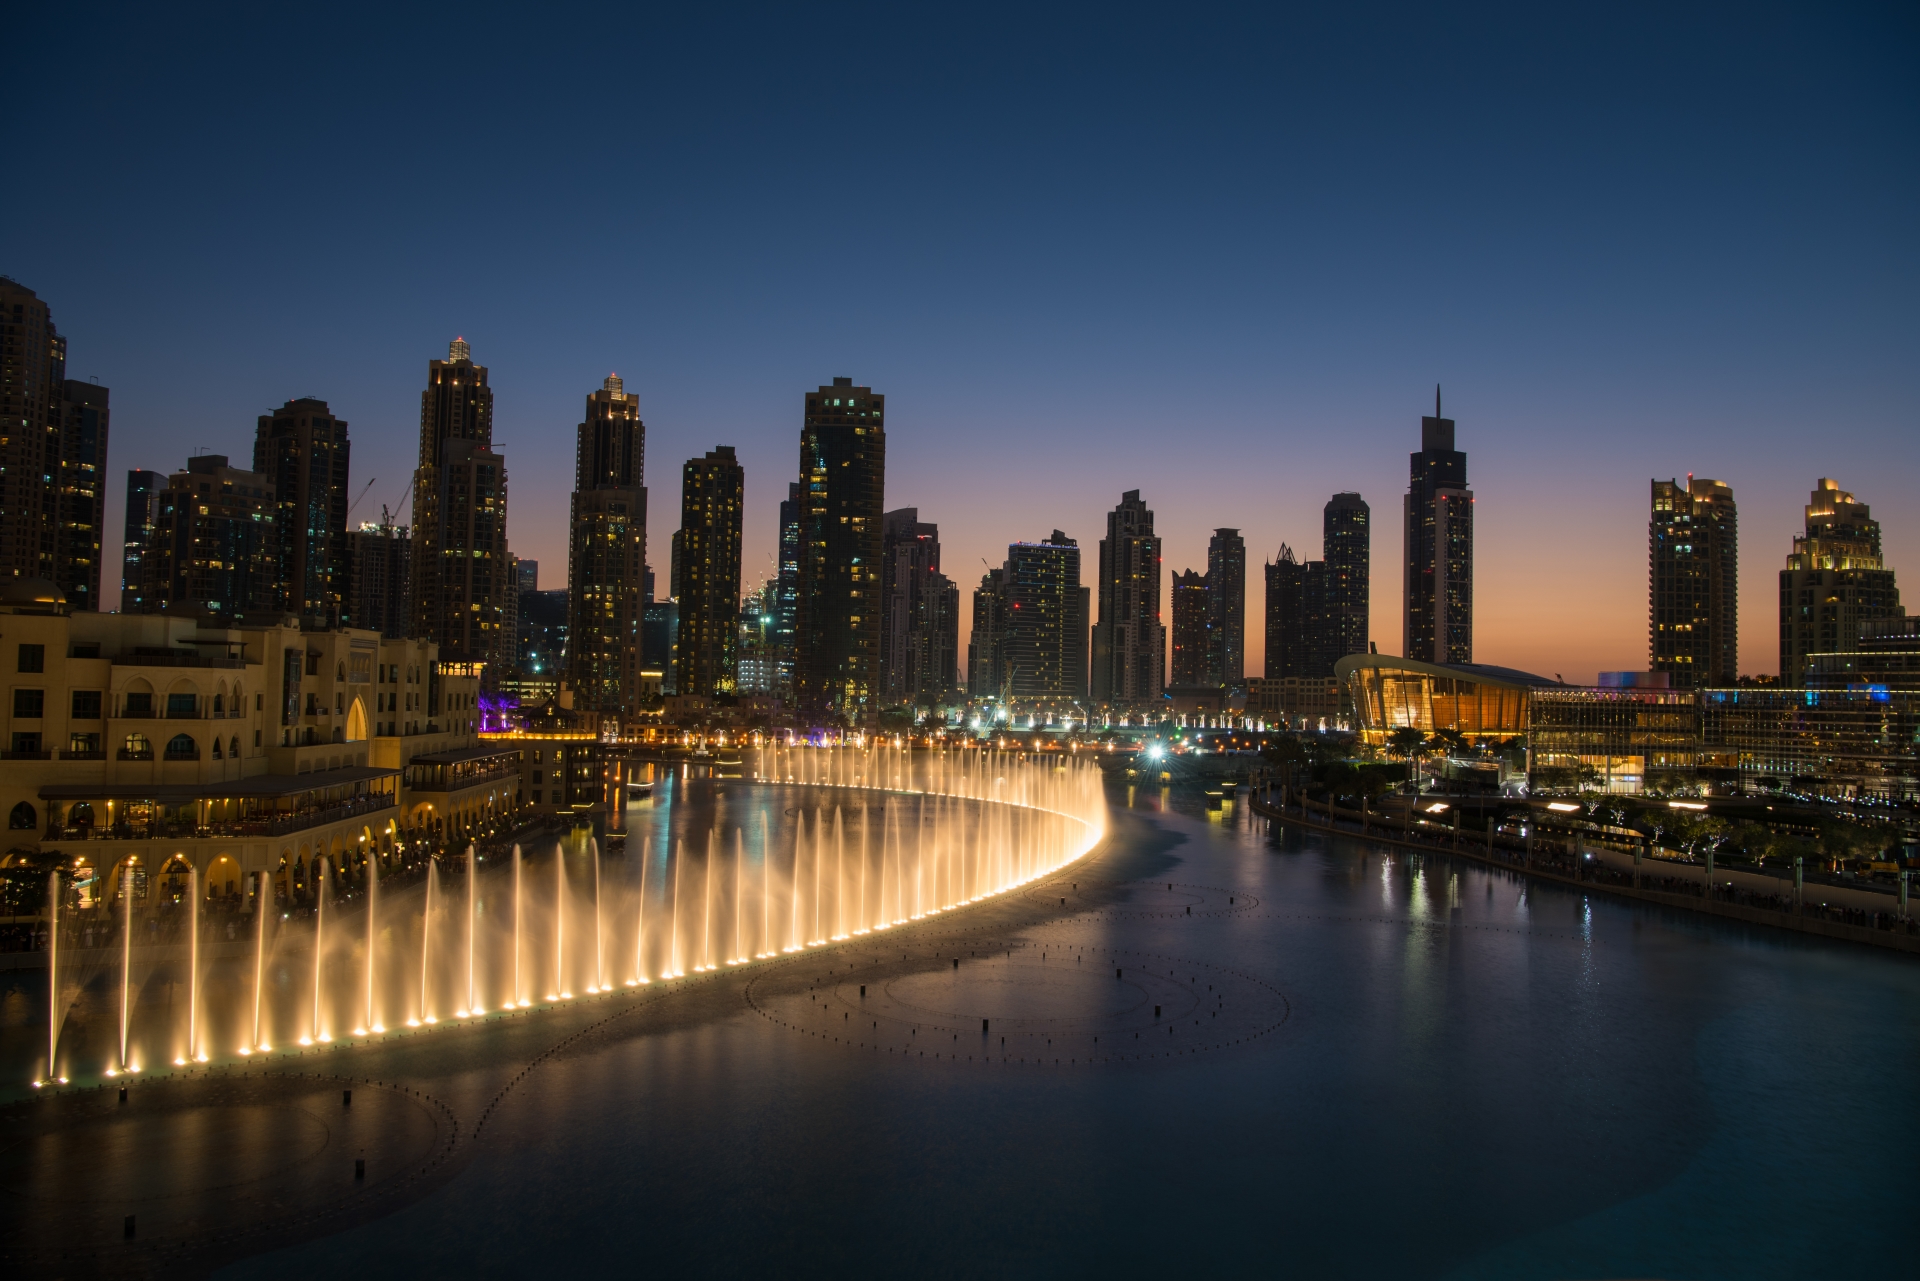 Dubai fountains at night